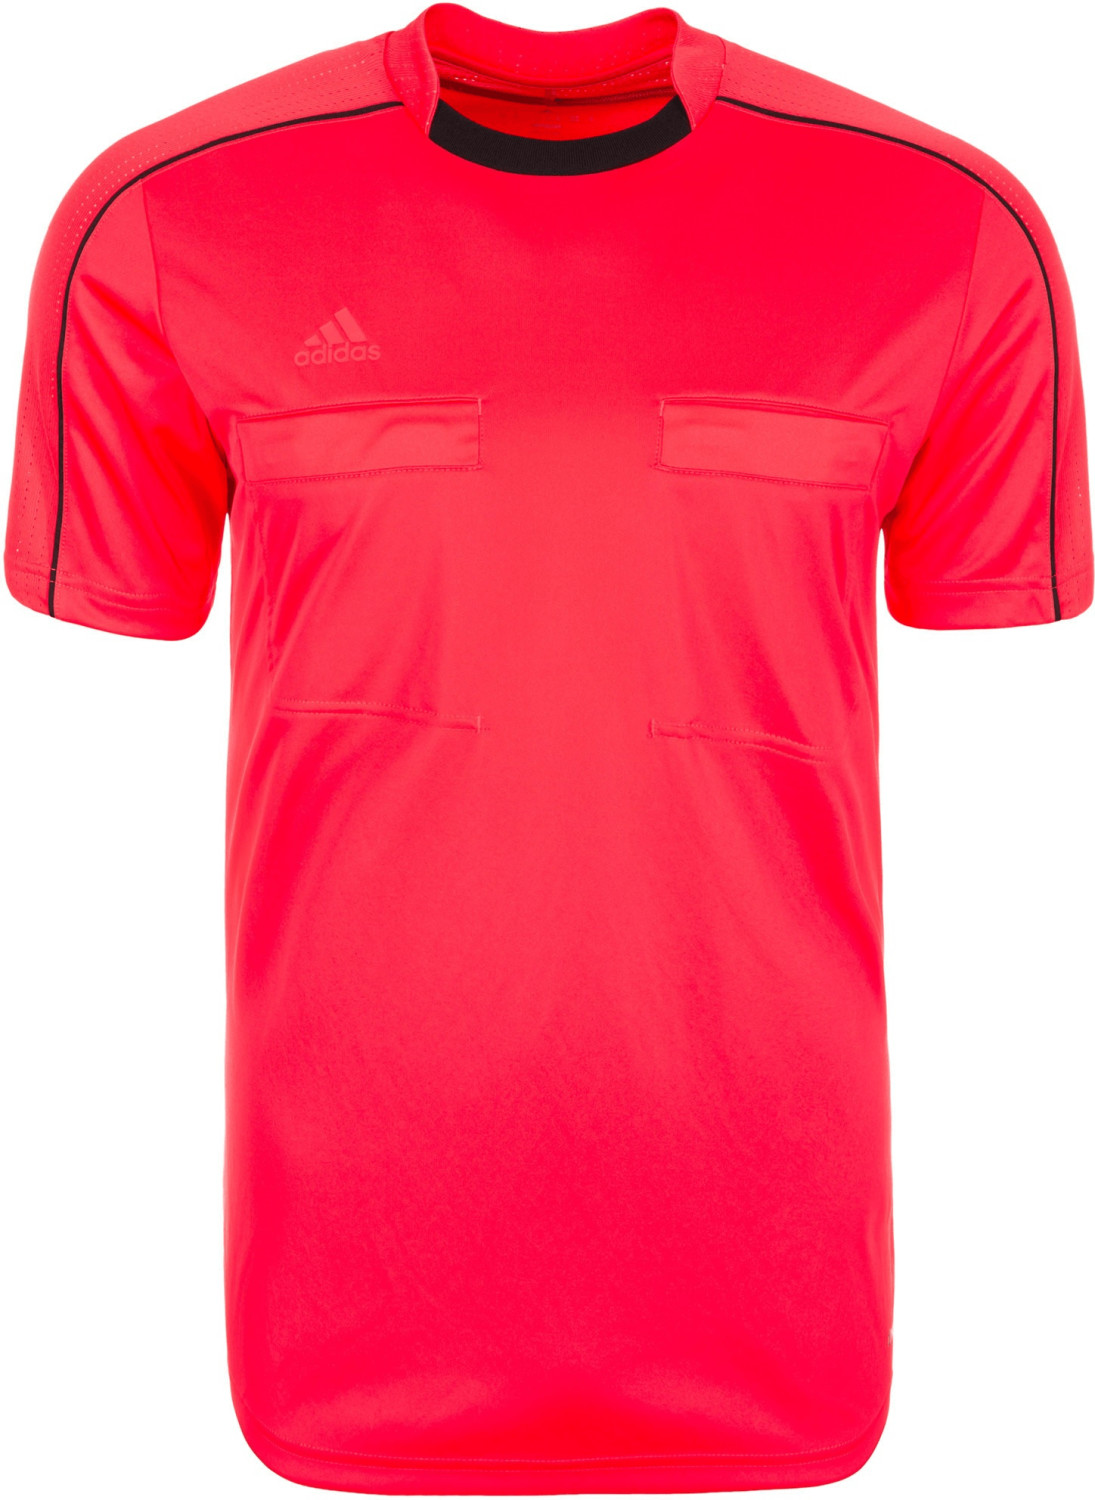 Adidas Referee 16 Jersey red